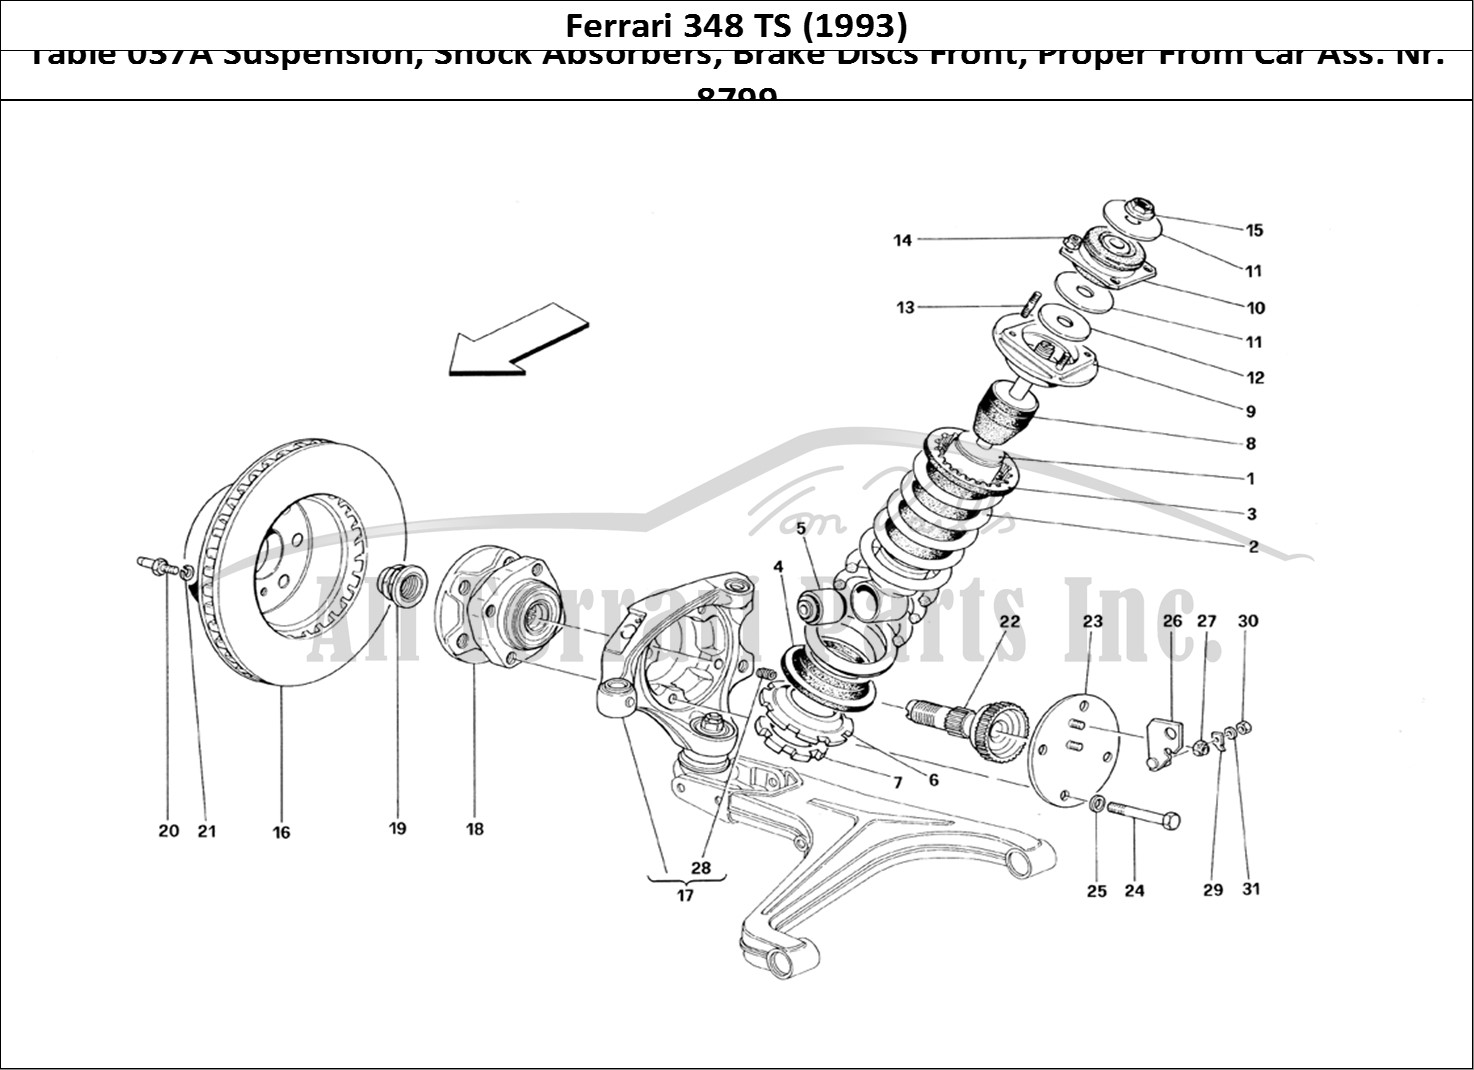 Ferrari Parts Ferrari 348 TB (1993) Page 037 Front Suspension - Shock